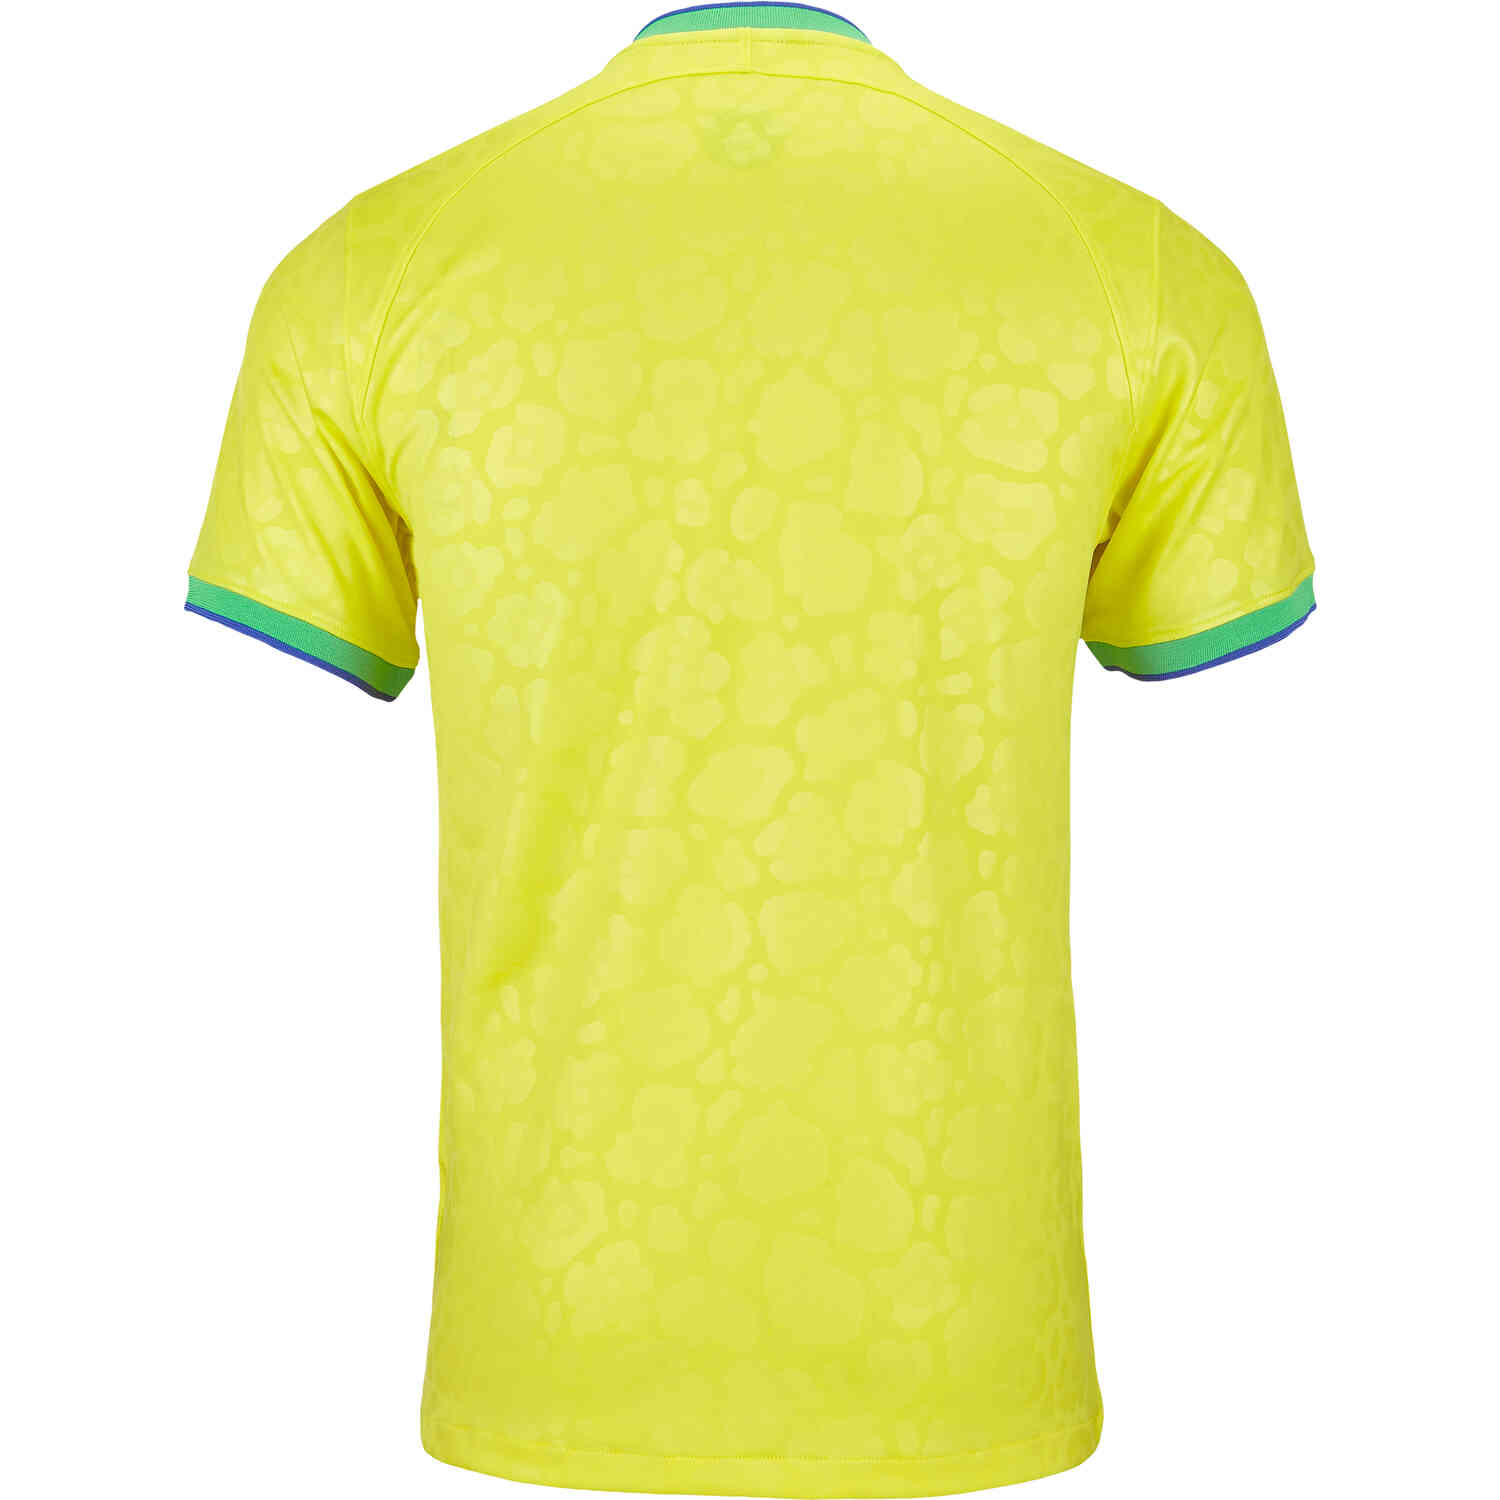 Brazil Shirt Adult Medium Yellow Green Brasil MLS Soccer Football Mens A95*